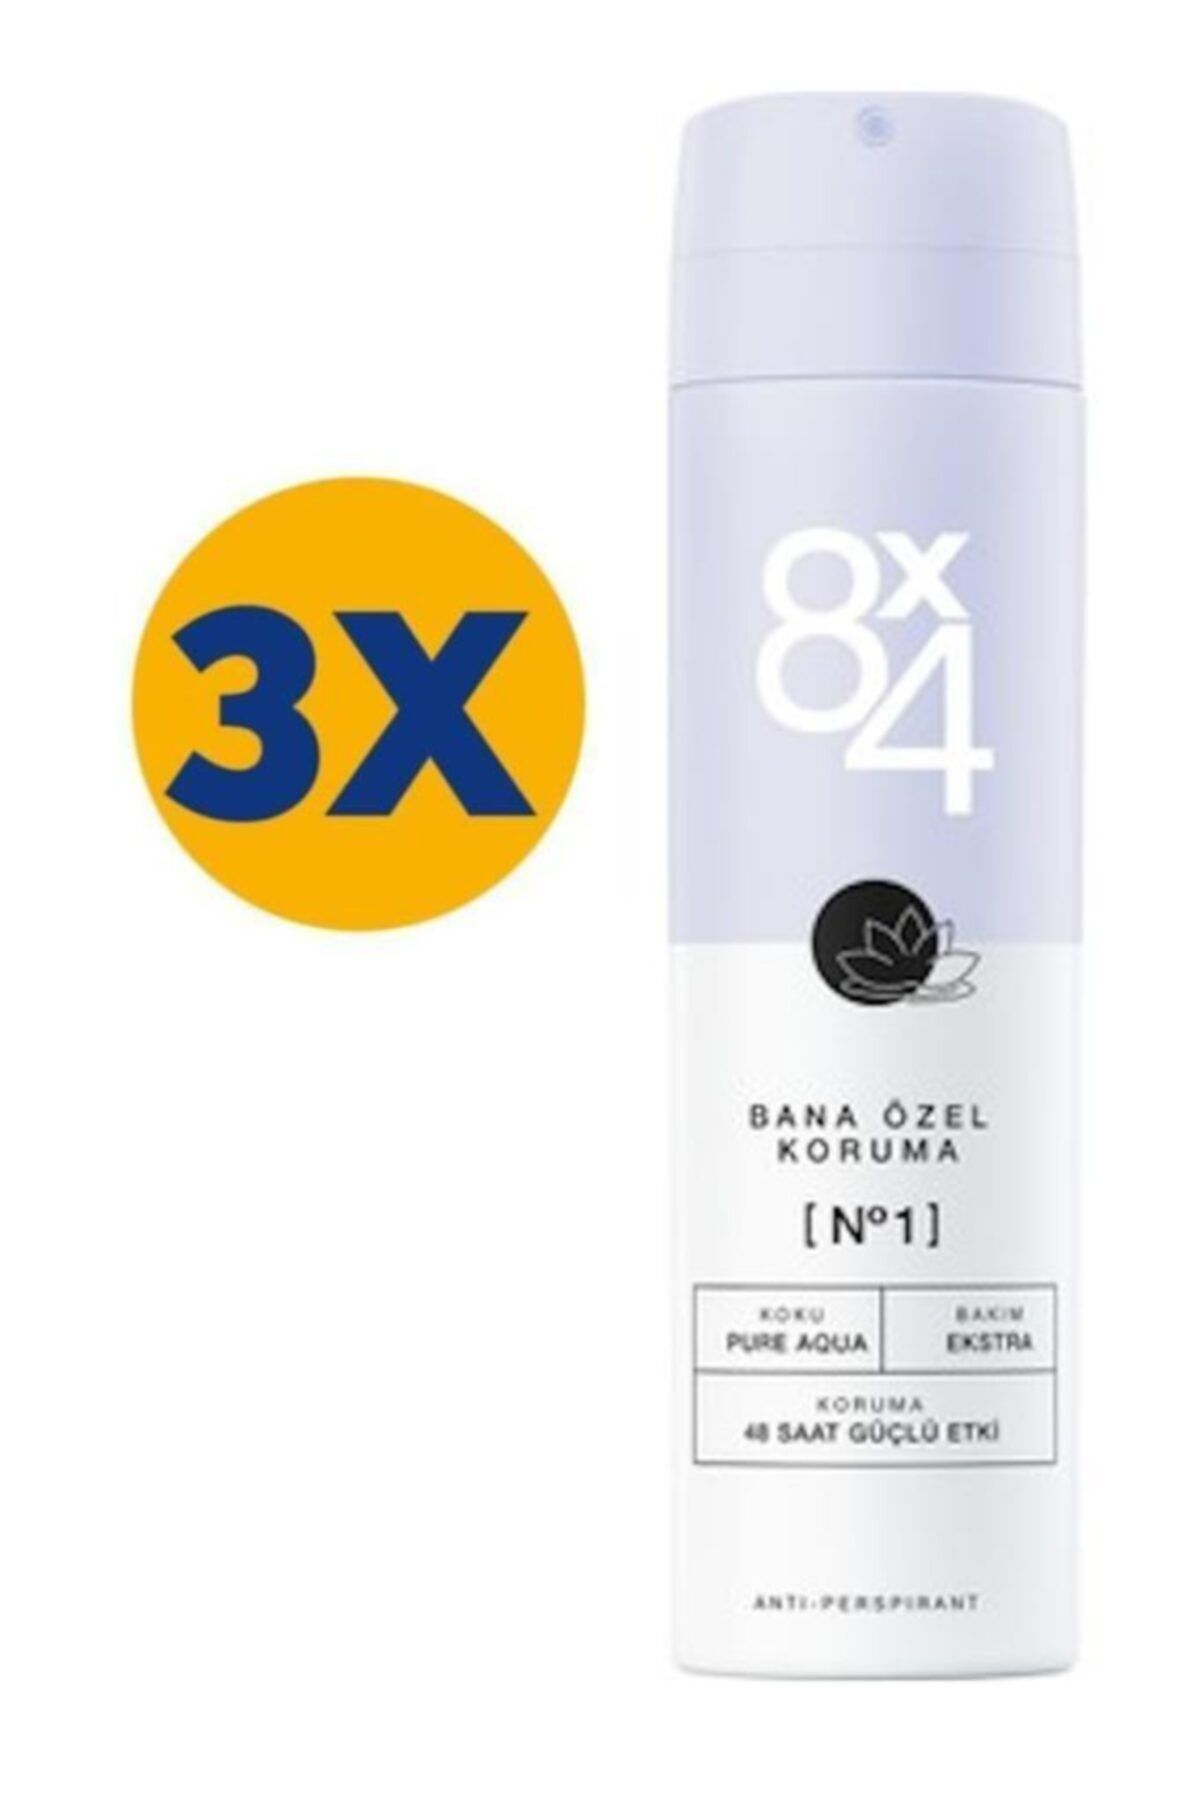 8x4 No.1 Pure Aqua Kadın Sprey Deodorant 150ml X 3 Adet